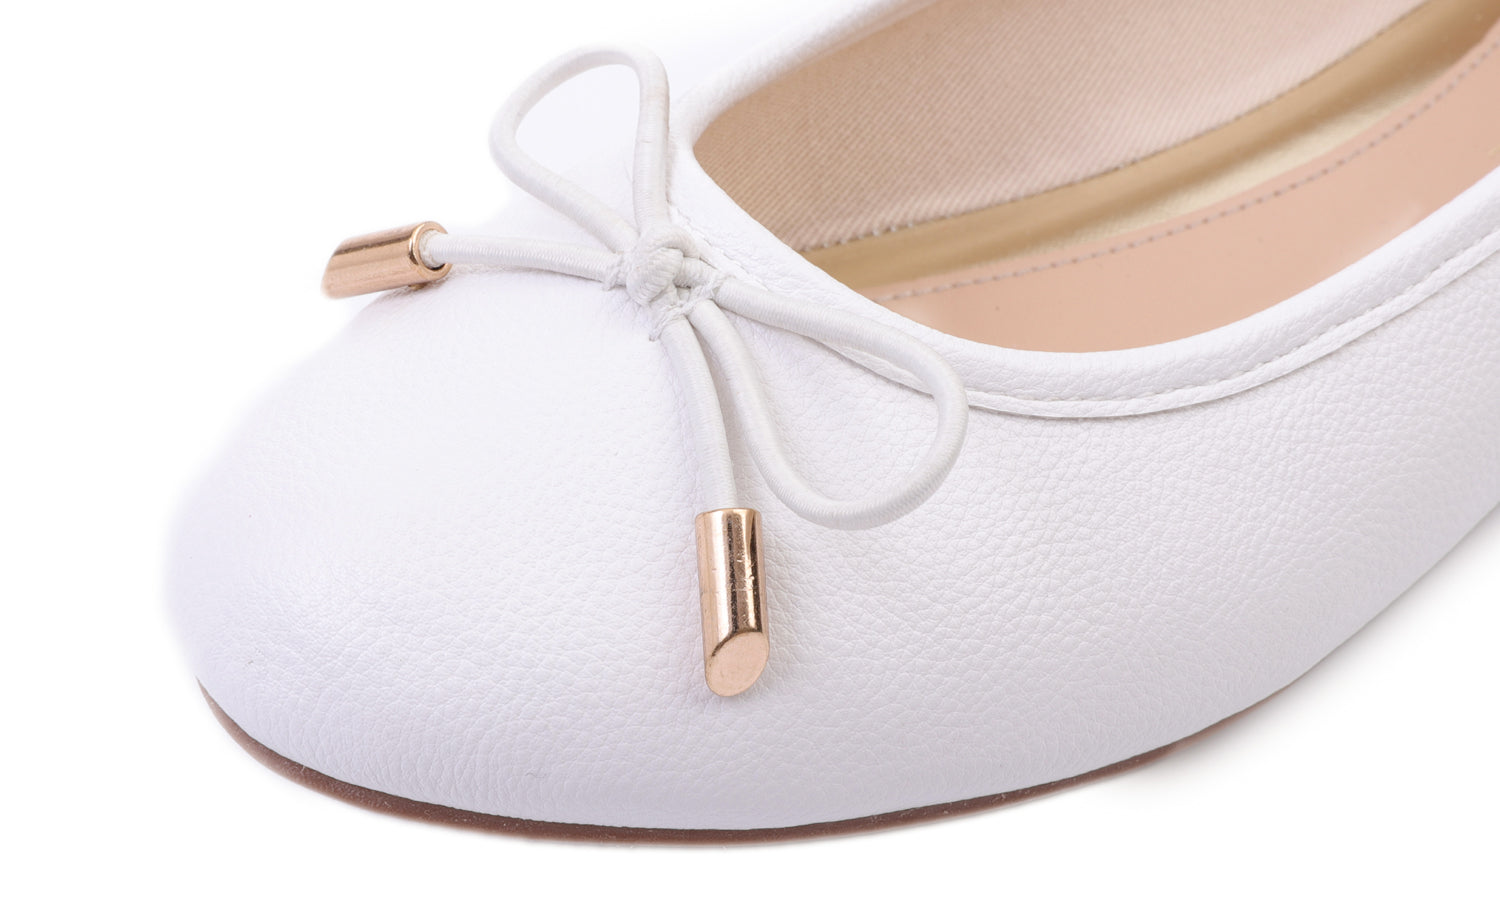 Feversole Women's Soft Cushion Comfort Round Toe Metal Trim Fashion Ballet Flats Walking Shoes White PU Leather